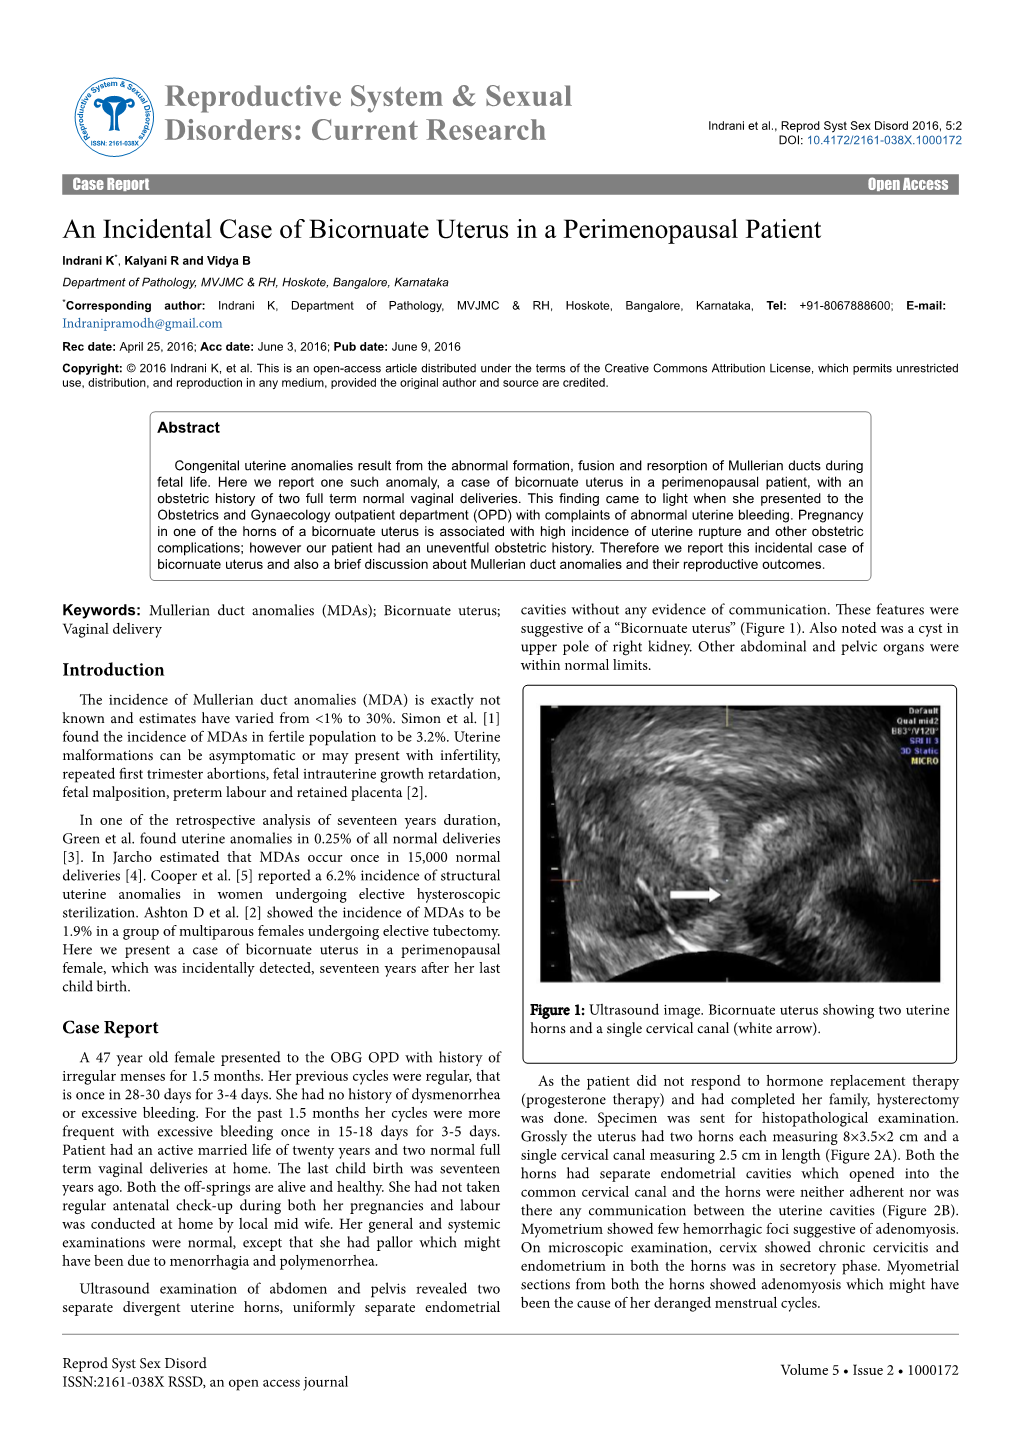 An Incidental Case of Bicornuate Uterus in a Perimenopausal Patient